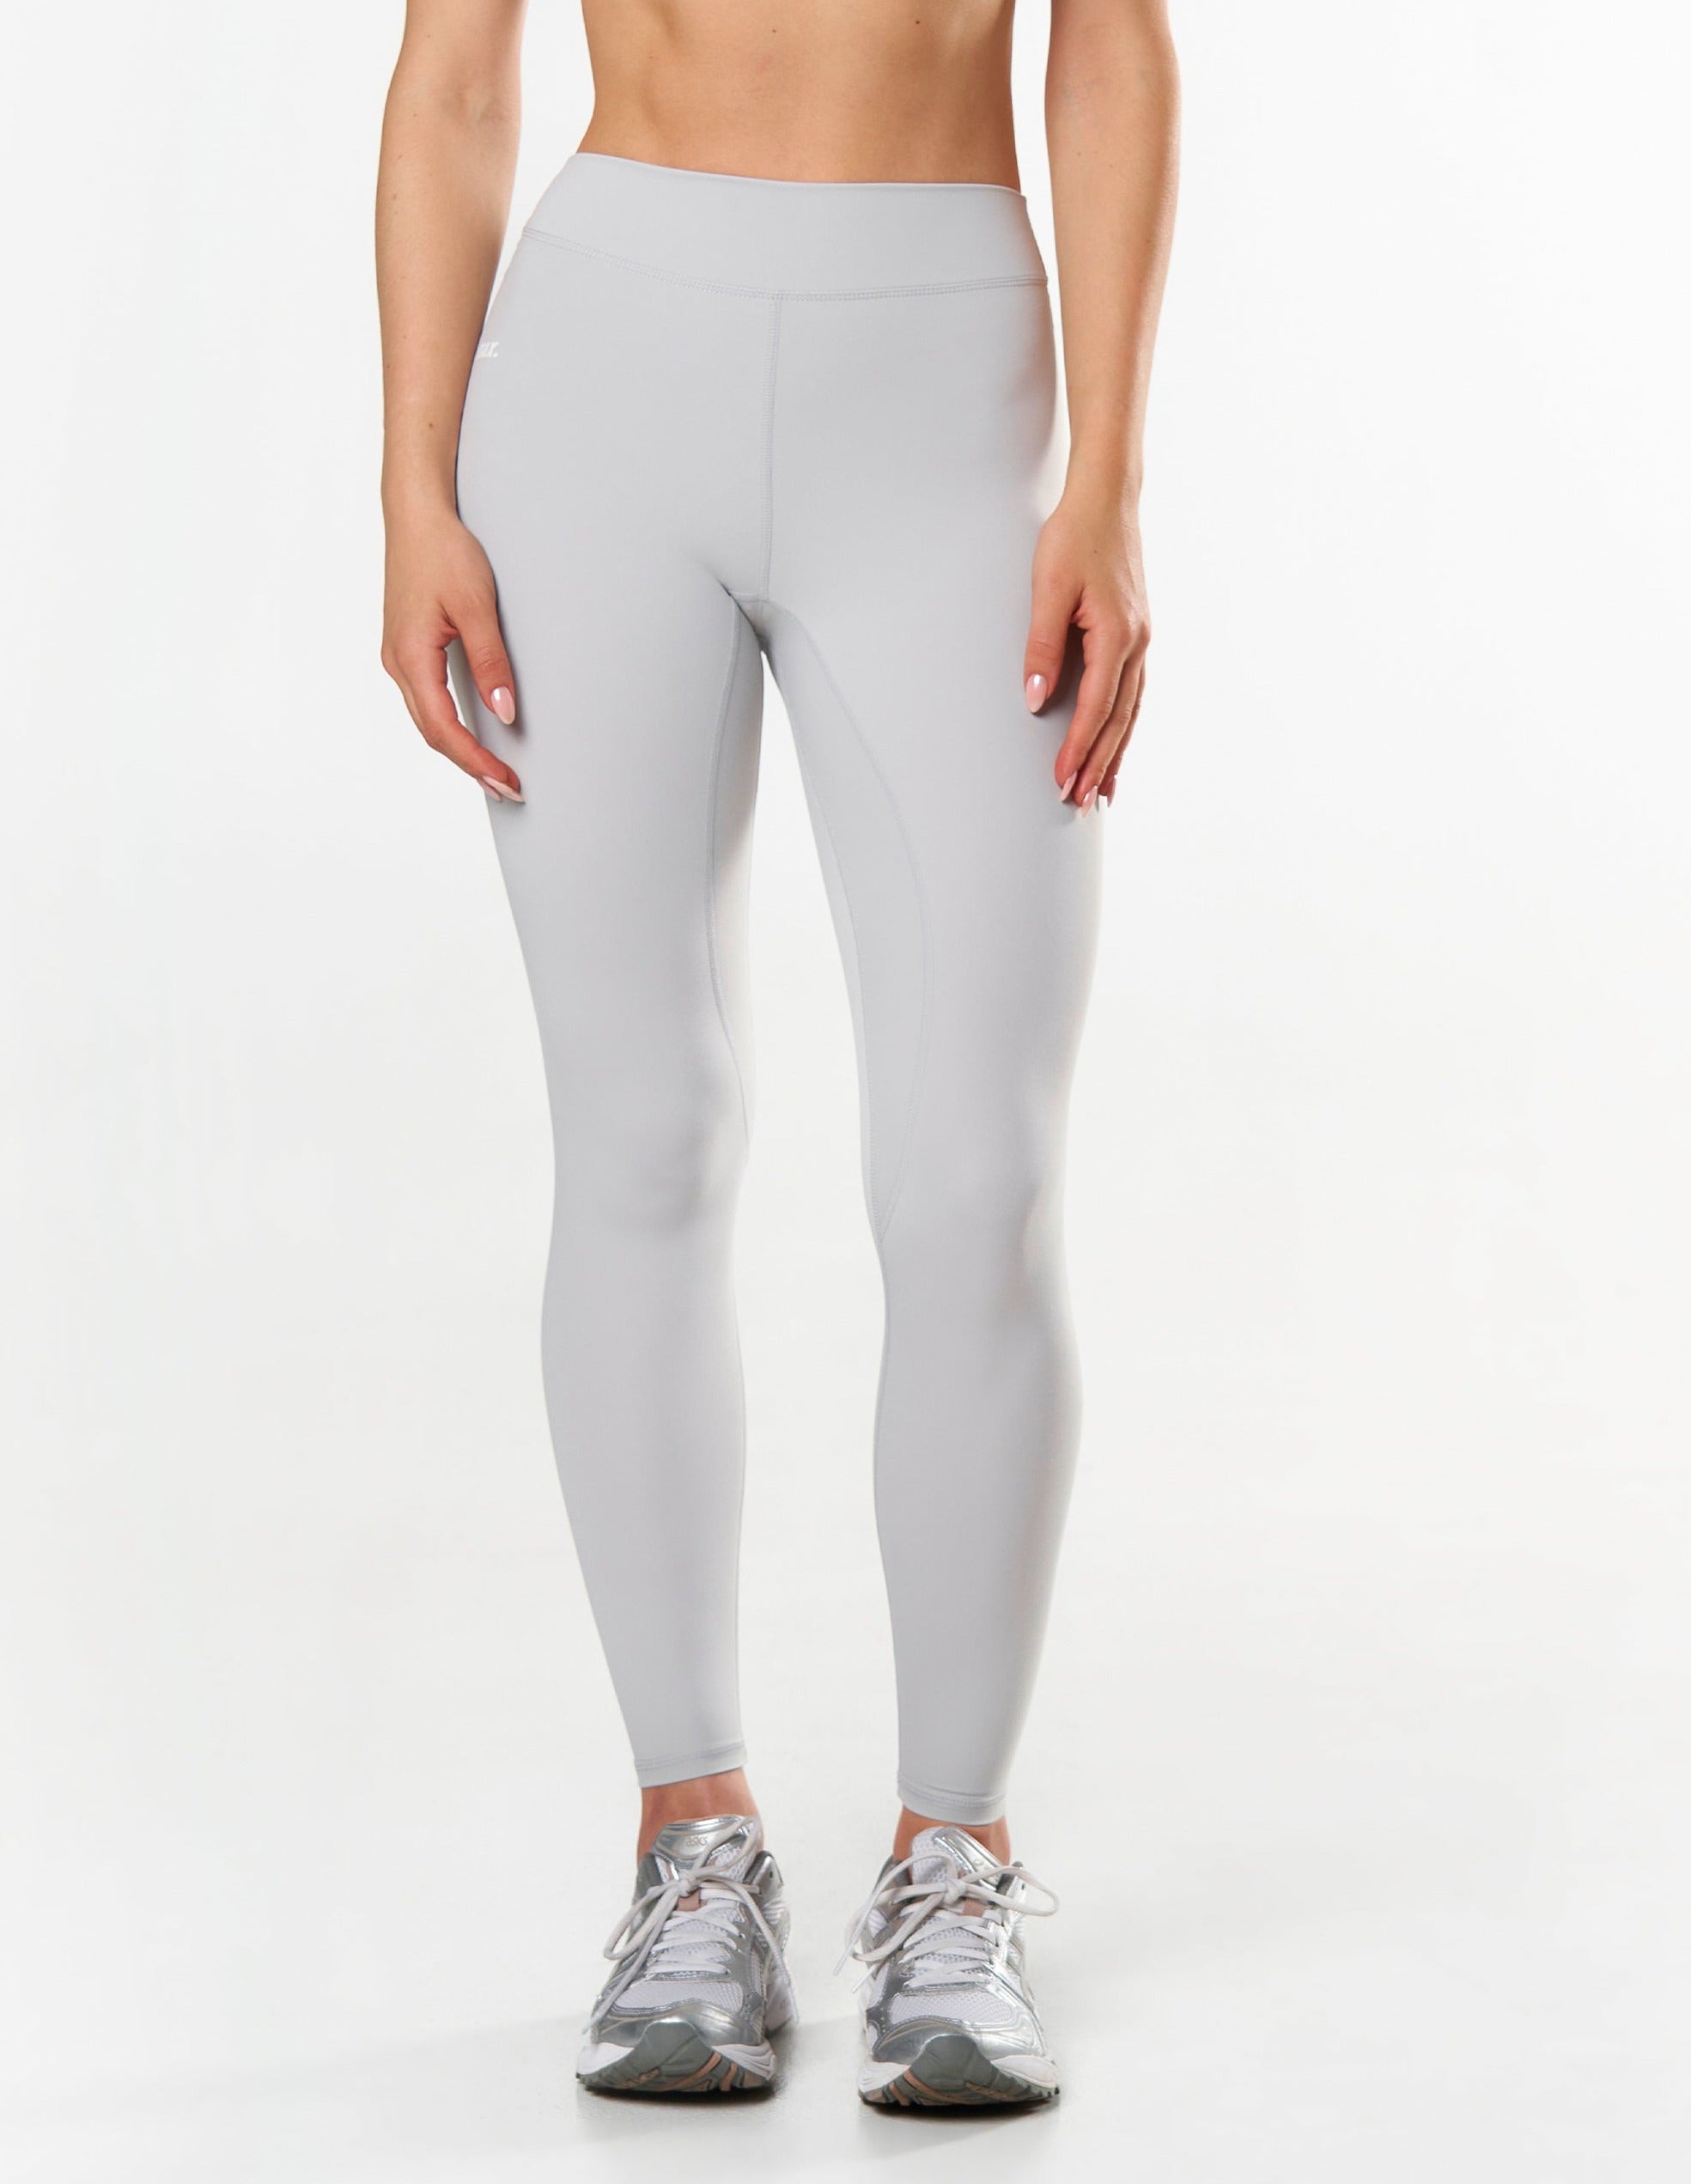 stax-mid-waist-tights-nandex-light-grey